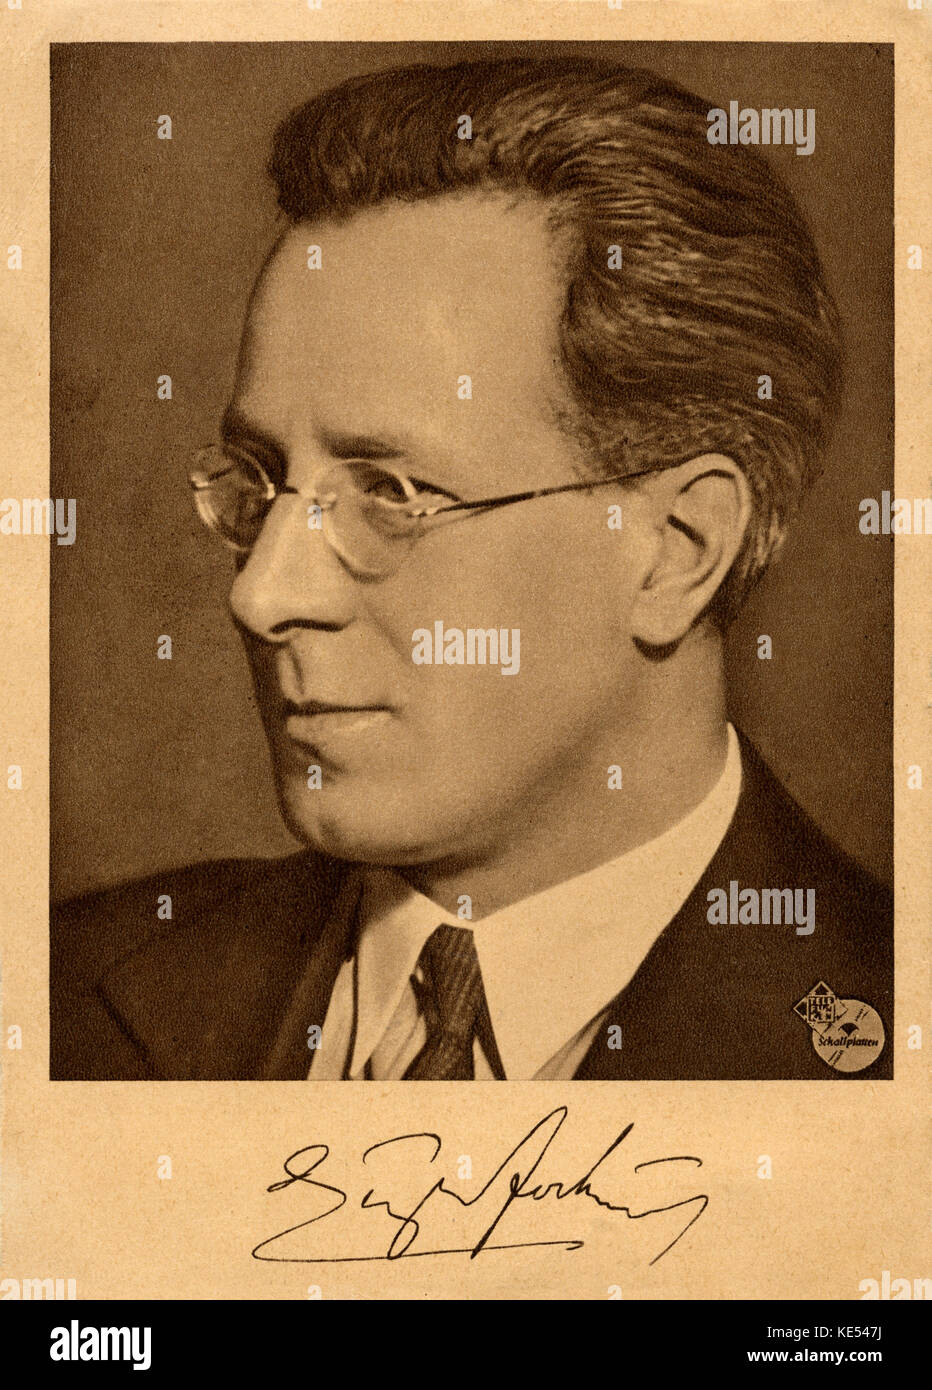 JOCHUM, Eugen, postcard. German conductor, 1 November 1902 - 26 March 1987 Stock Photo